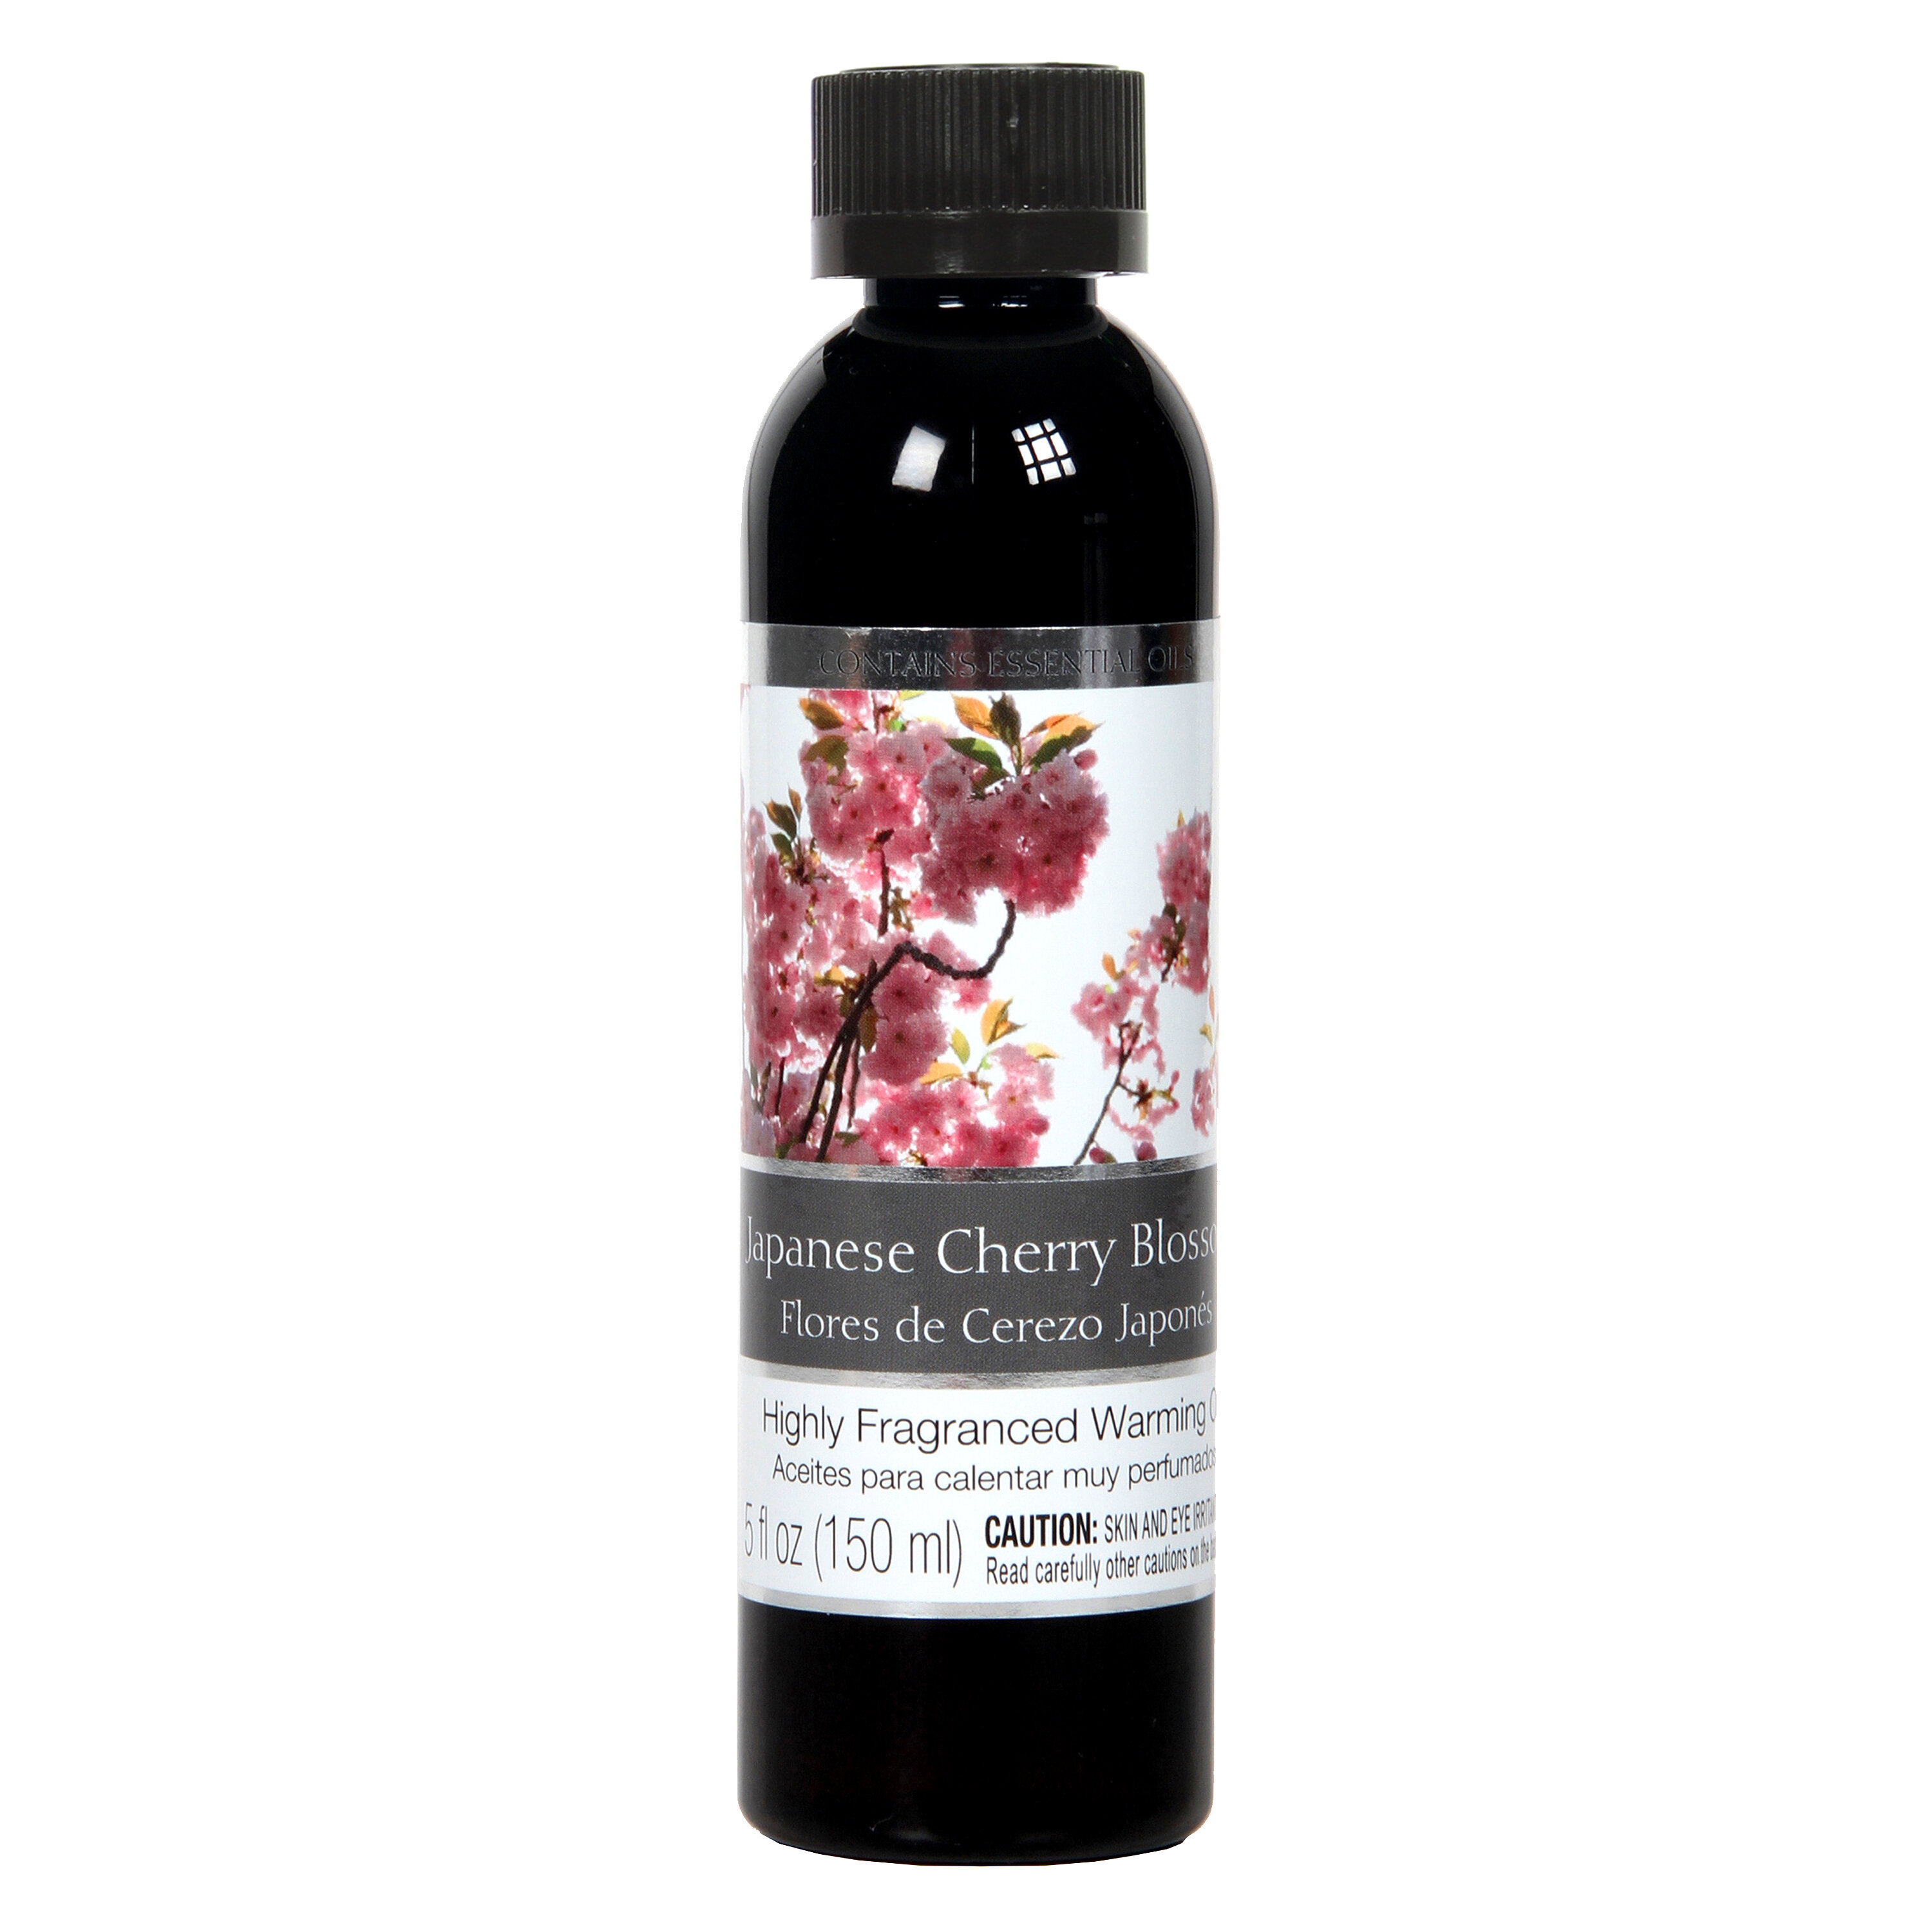 Symple Stuff Bustos Japanese Cherry Blossom Fragranced Warming Oils |  Wayfair